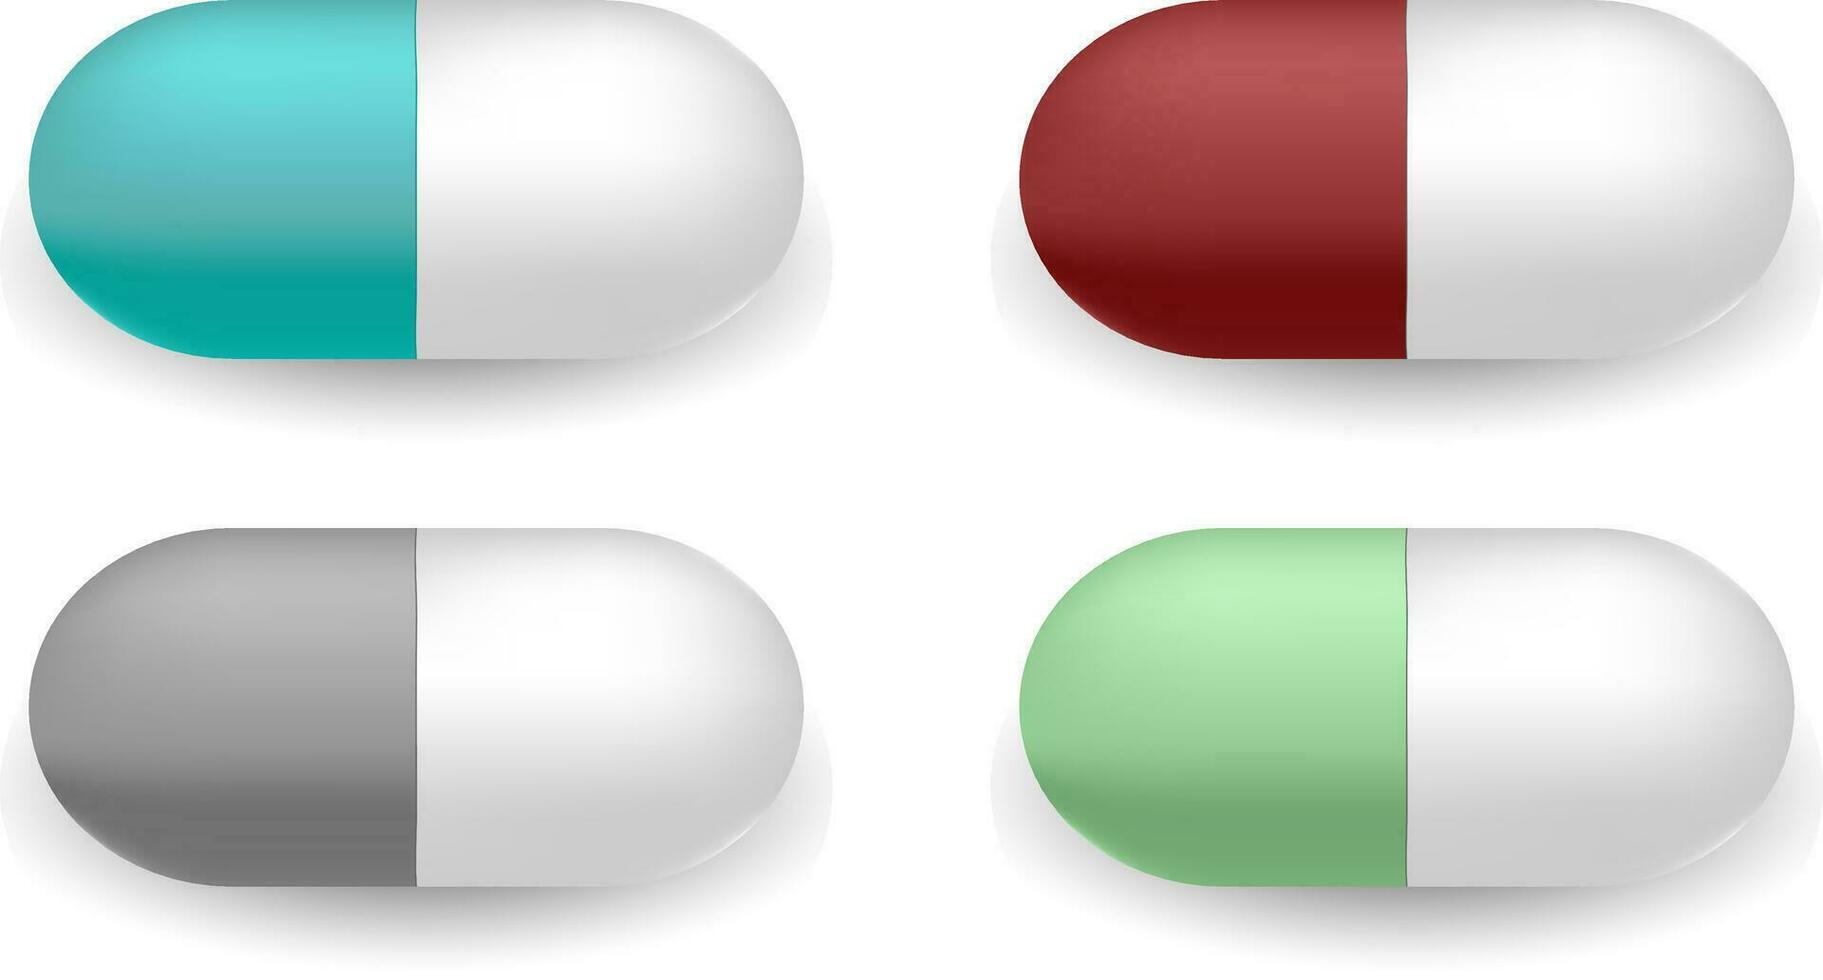 farmacia pastillas aislado en blanco antecedentes. cápsulas con diferente color caparazón. cura o placebo medicina productos vector ilustración. eps10